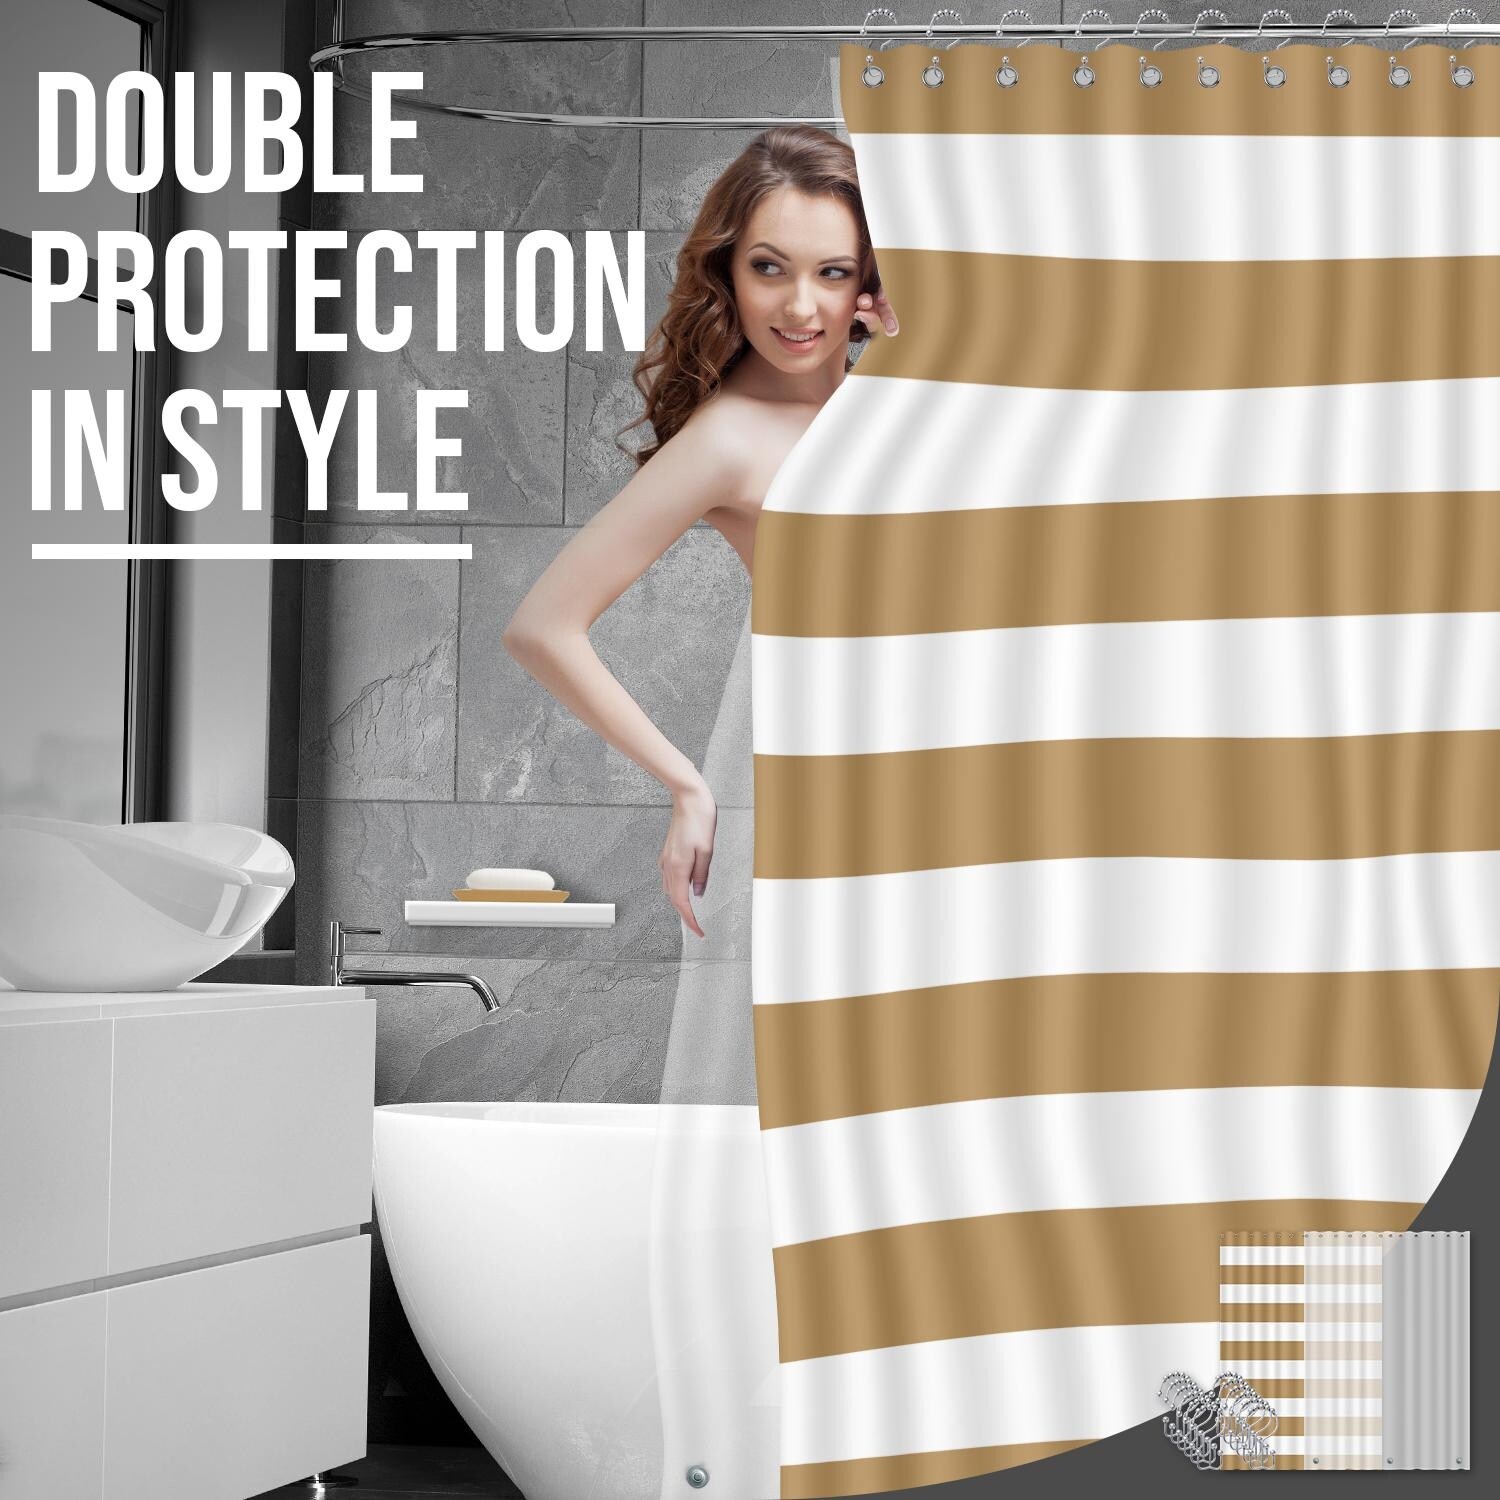 Clara Clark 9 Piece Complete Bathroom Accessories Kit with Shower